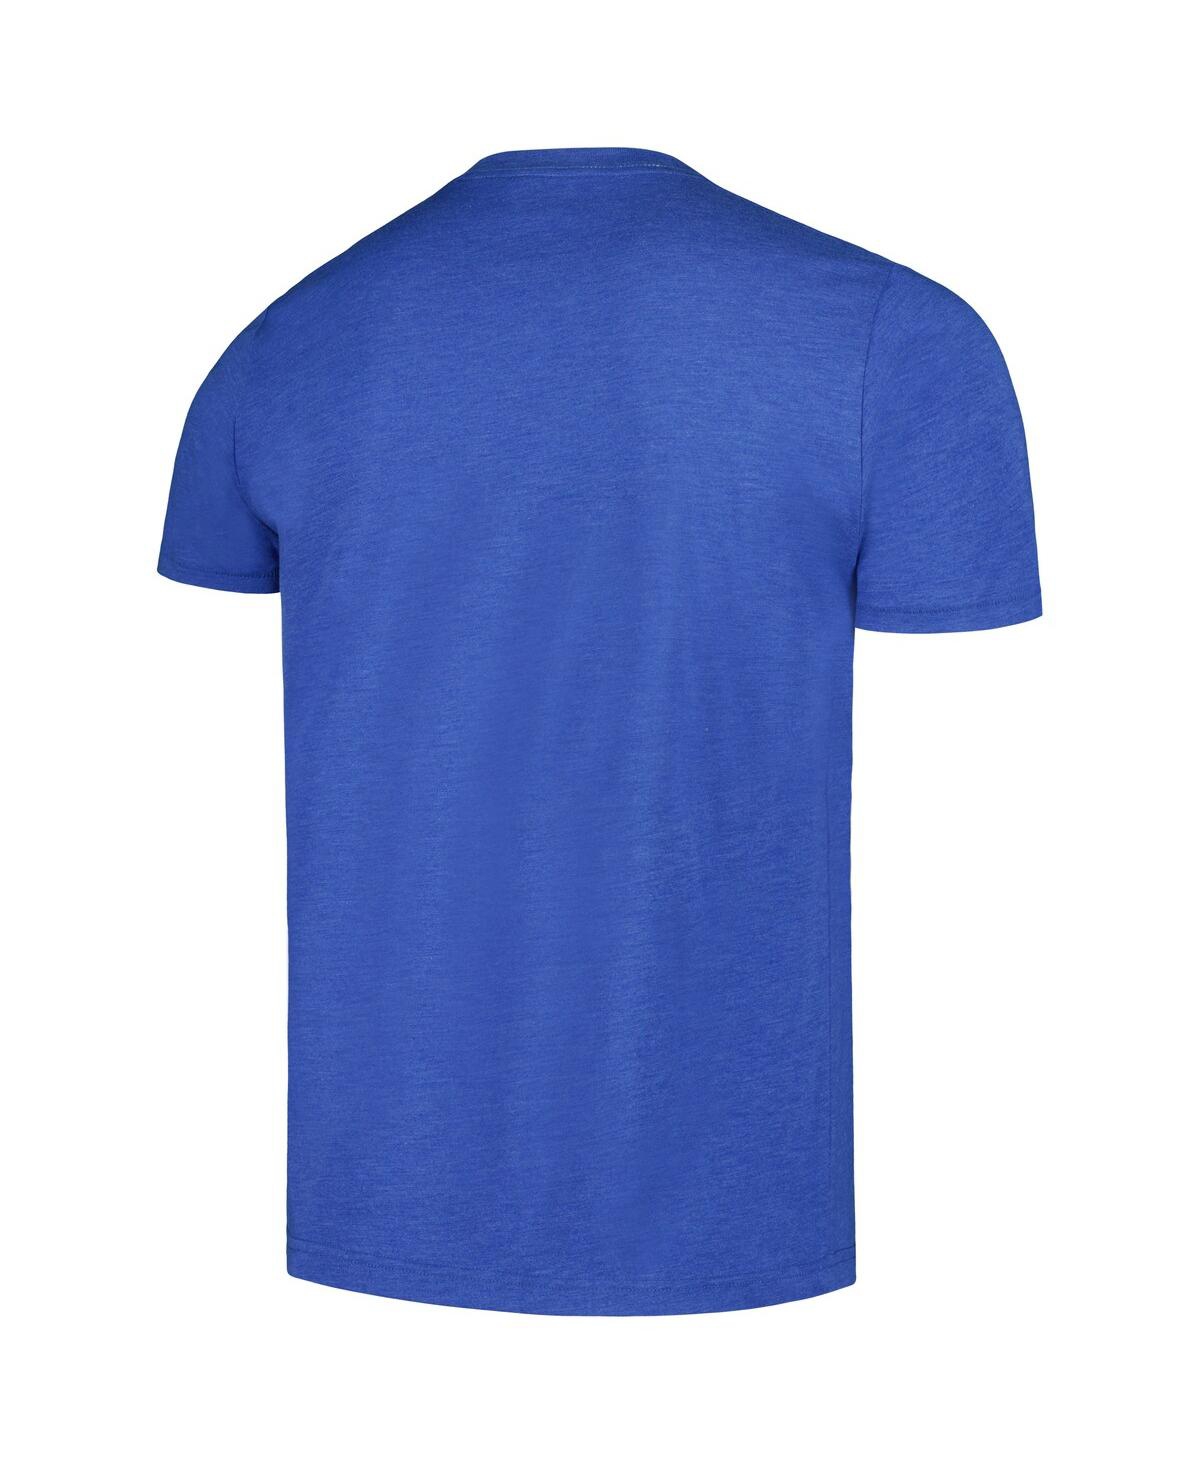 Shop Homage Men's And Women's  Royal Topps Tri-blend T-shirt